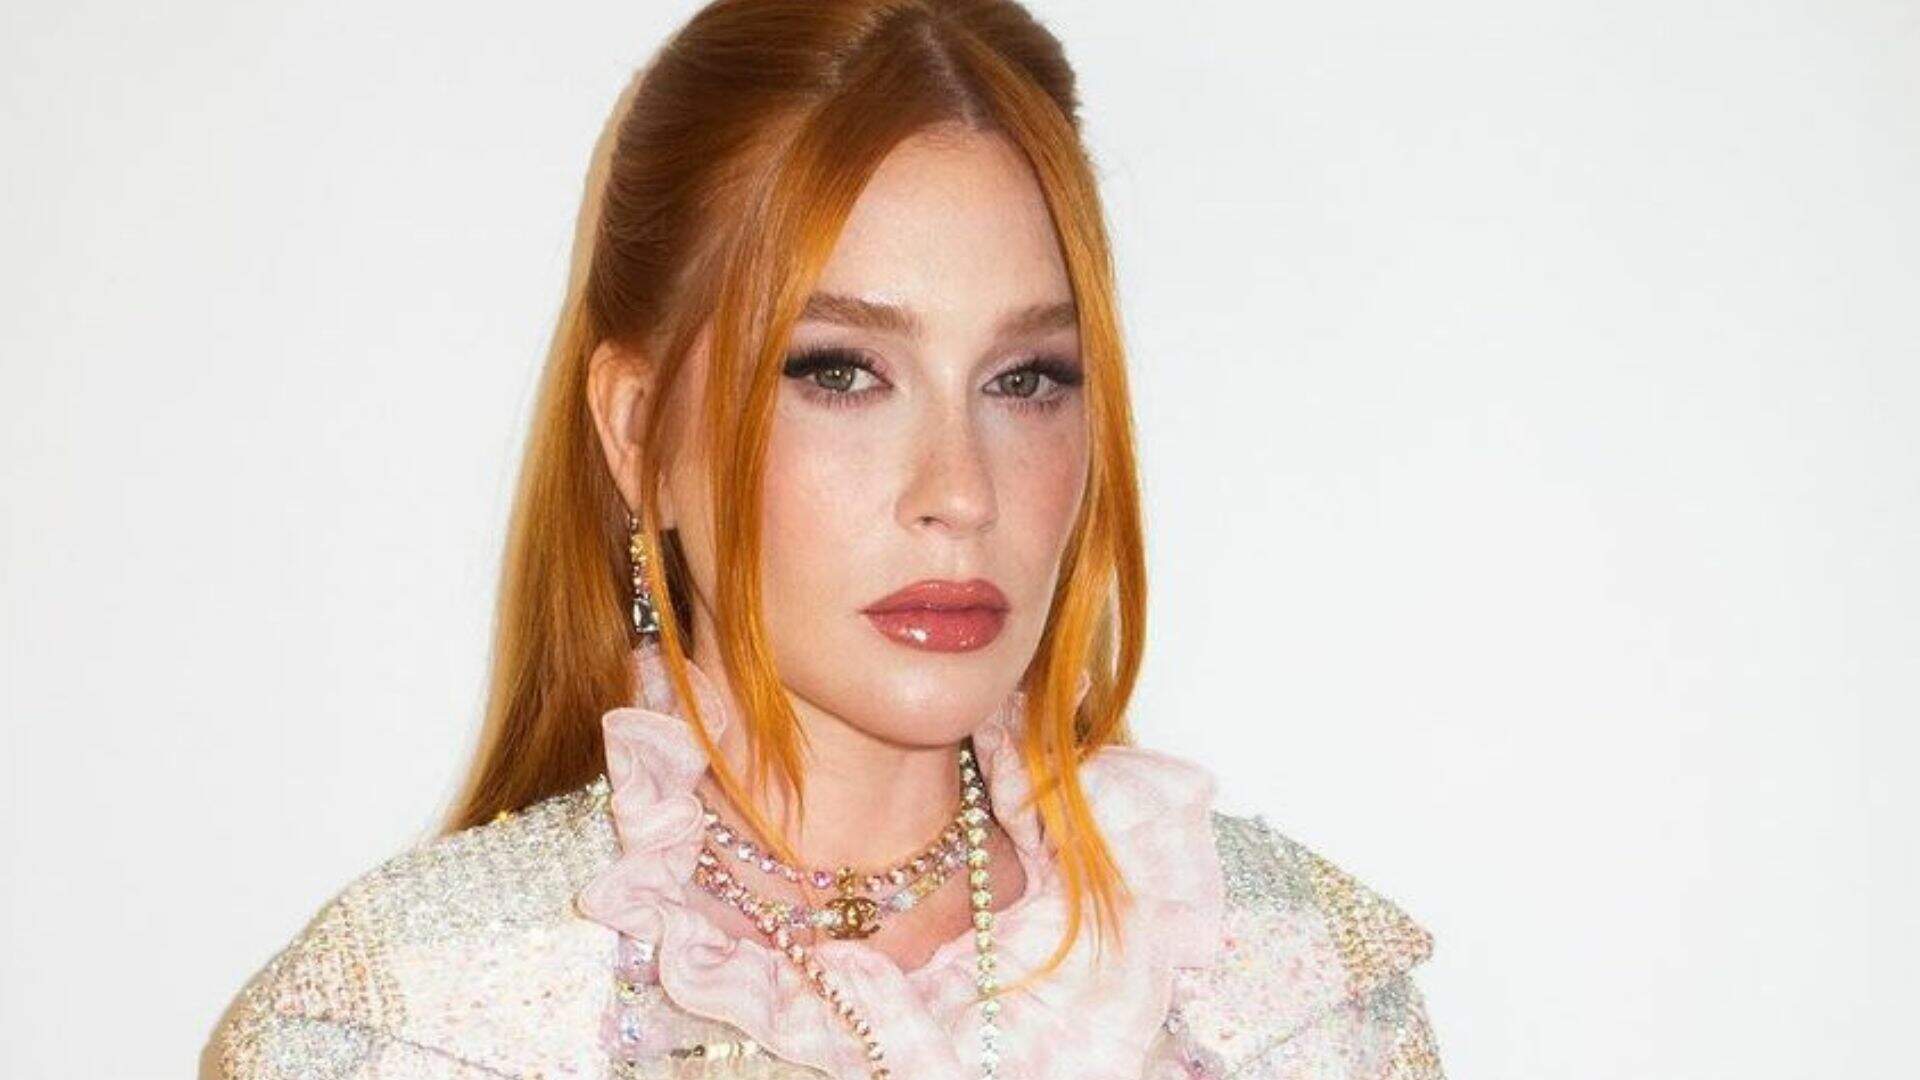 Puro luxo! Marina Ruy Barbosa aposta em look da Chanel com jaqueta de R$ 80 mil - Metropolitana FM